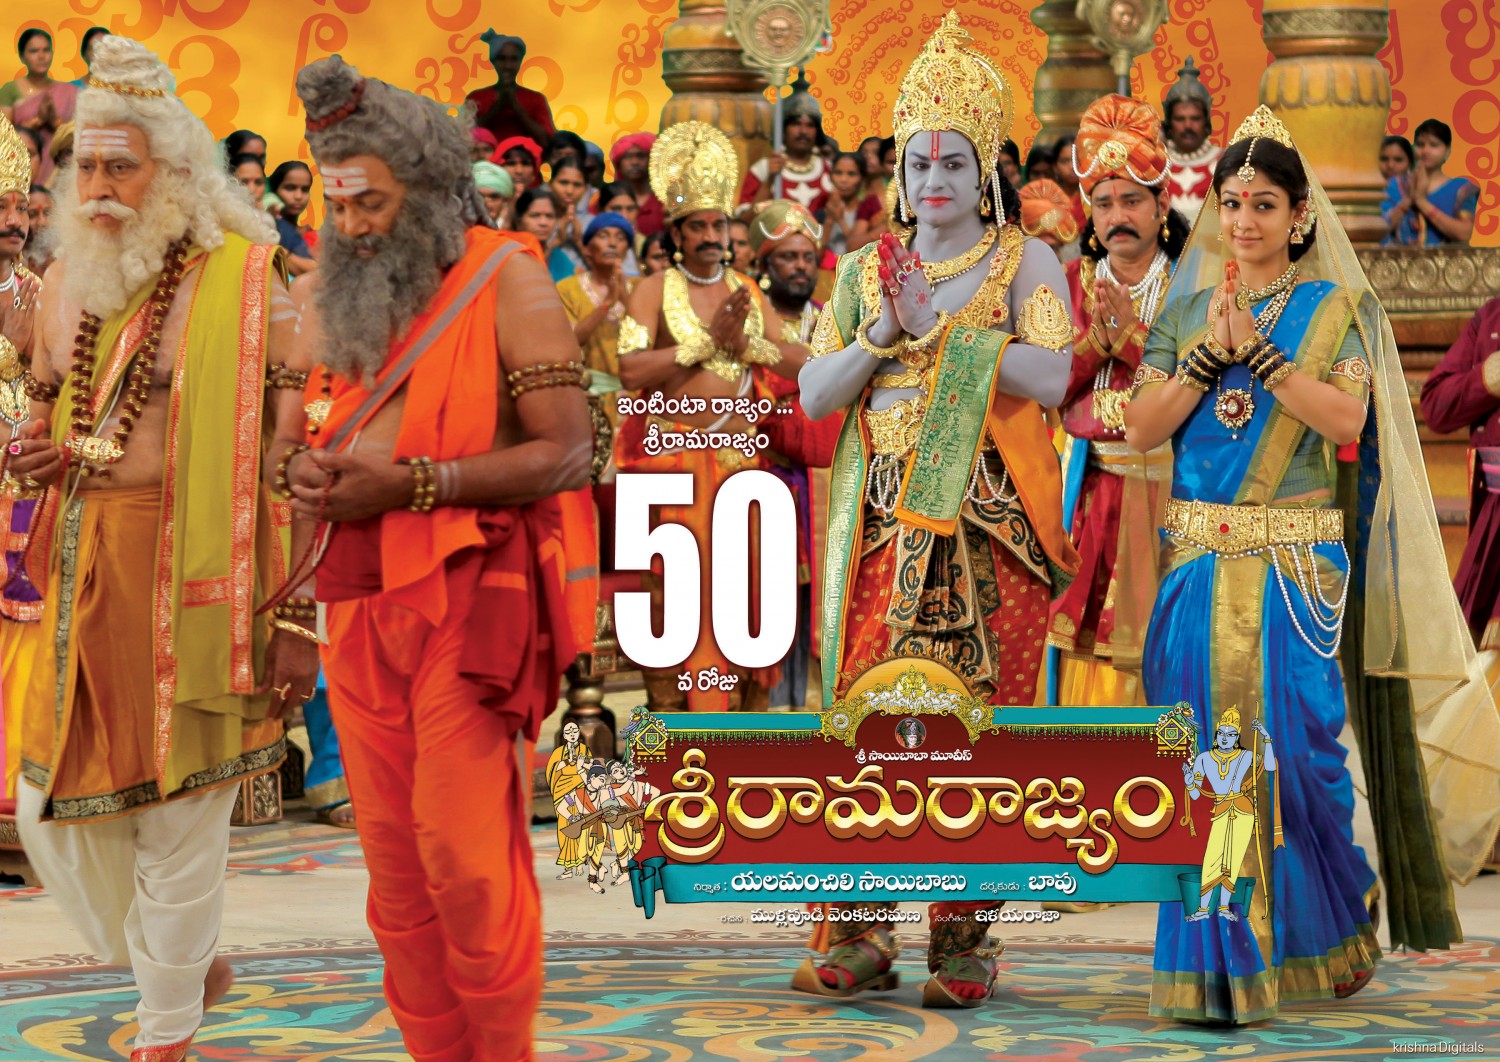 Extra Large Movie Poster Image for Sri Rama Rajyam (#5 of 10)